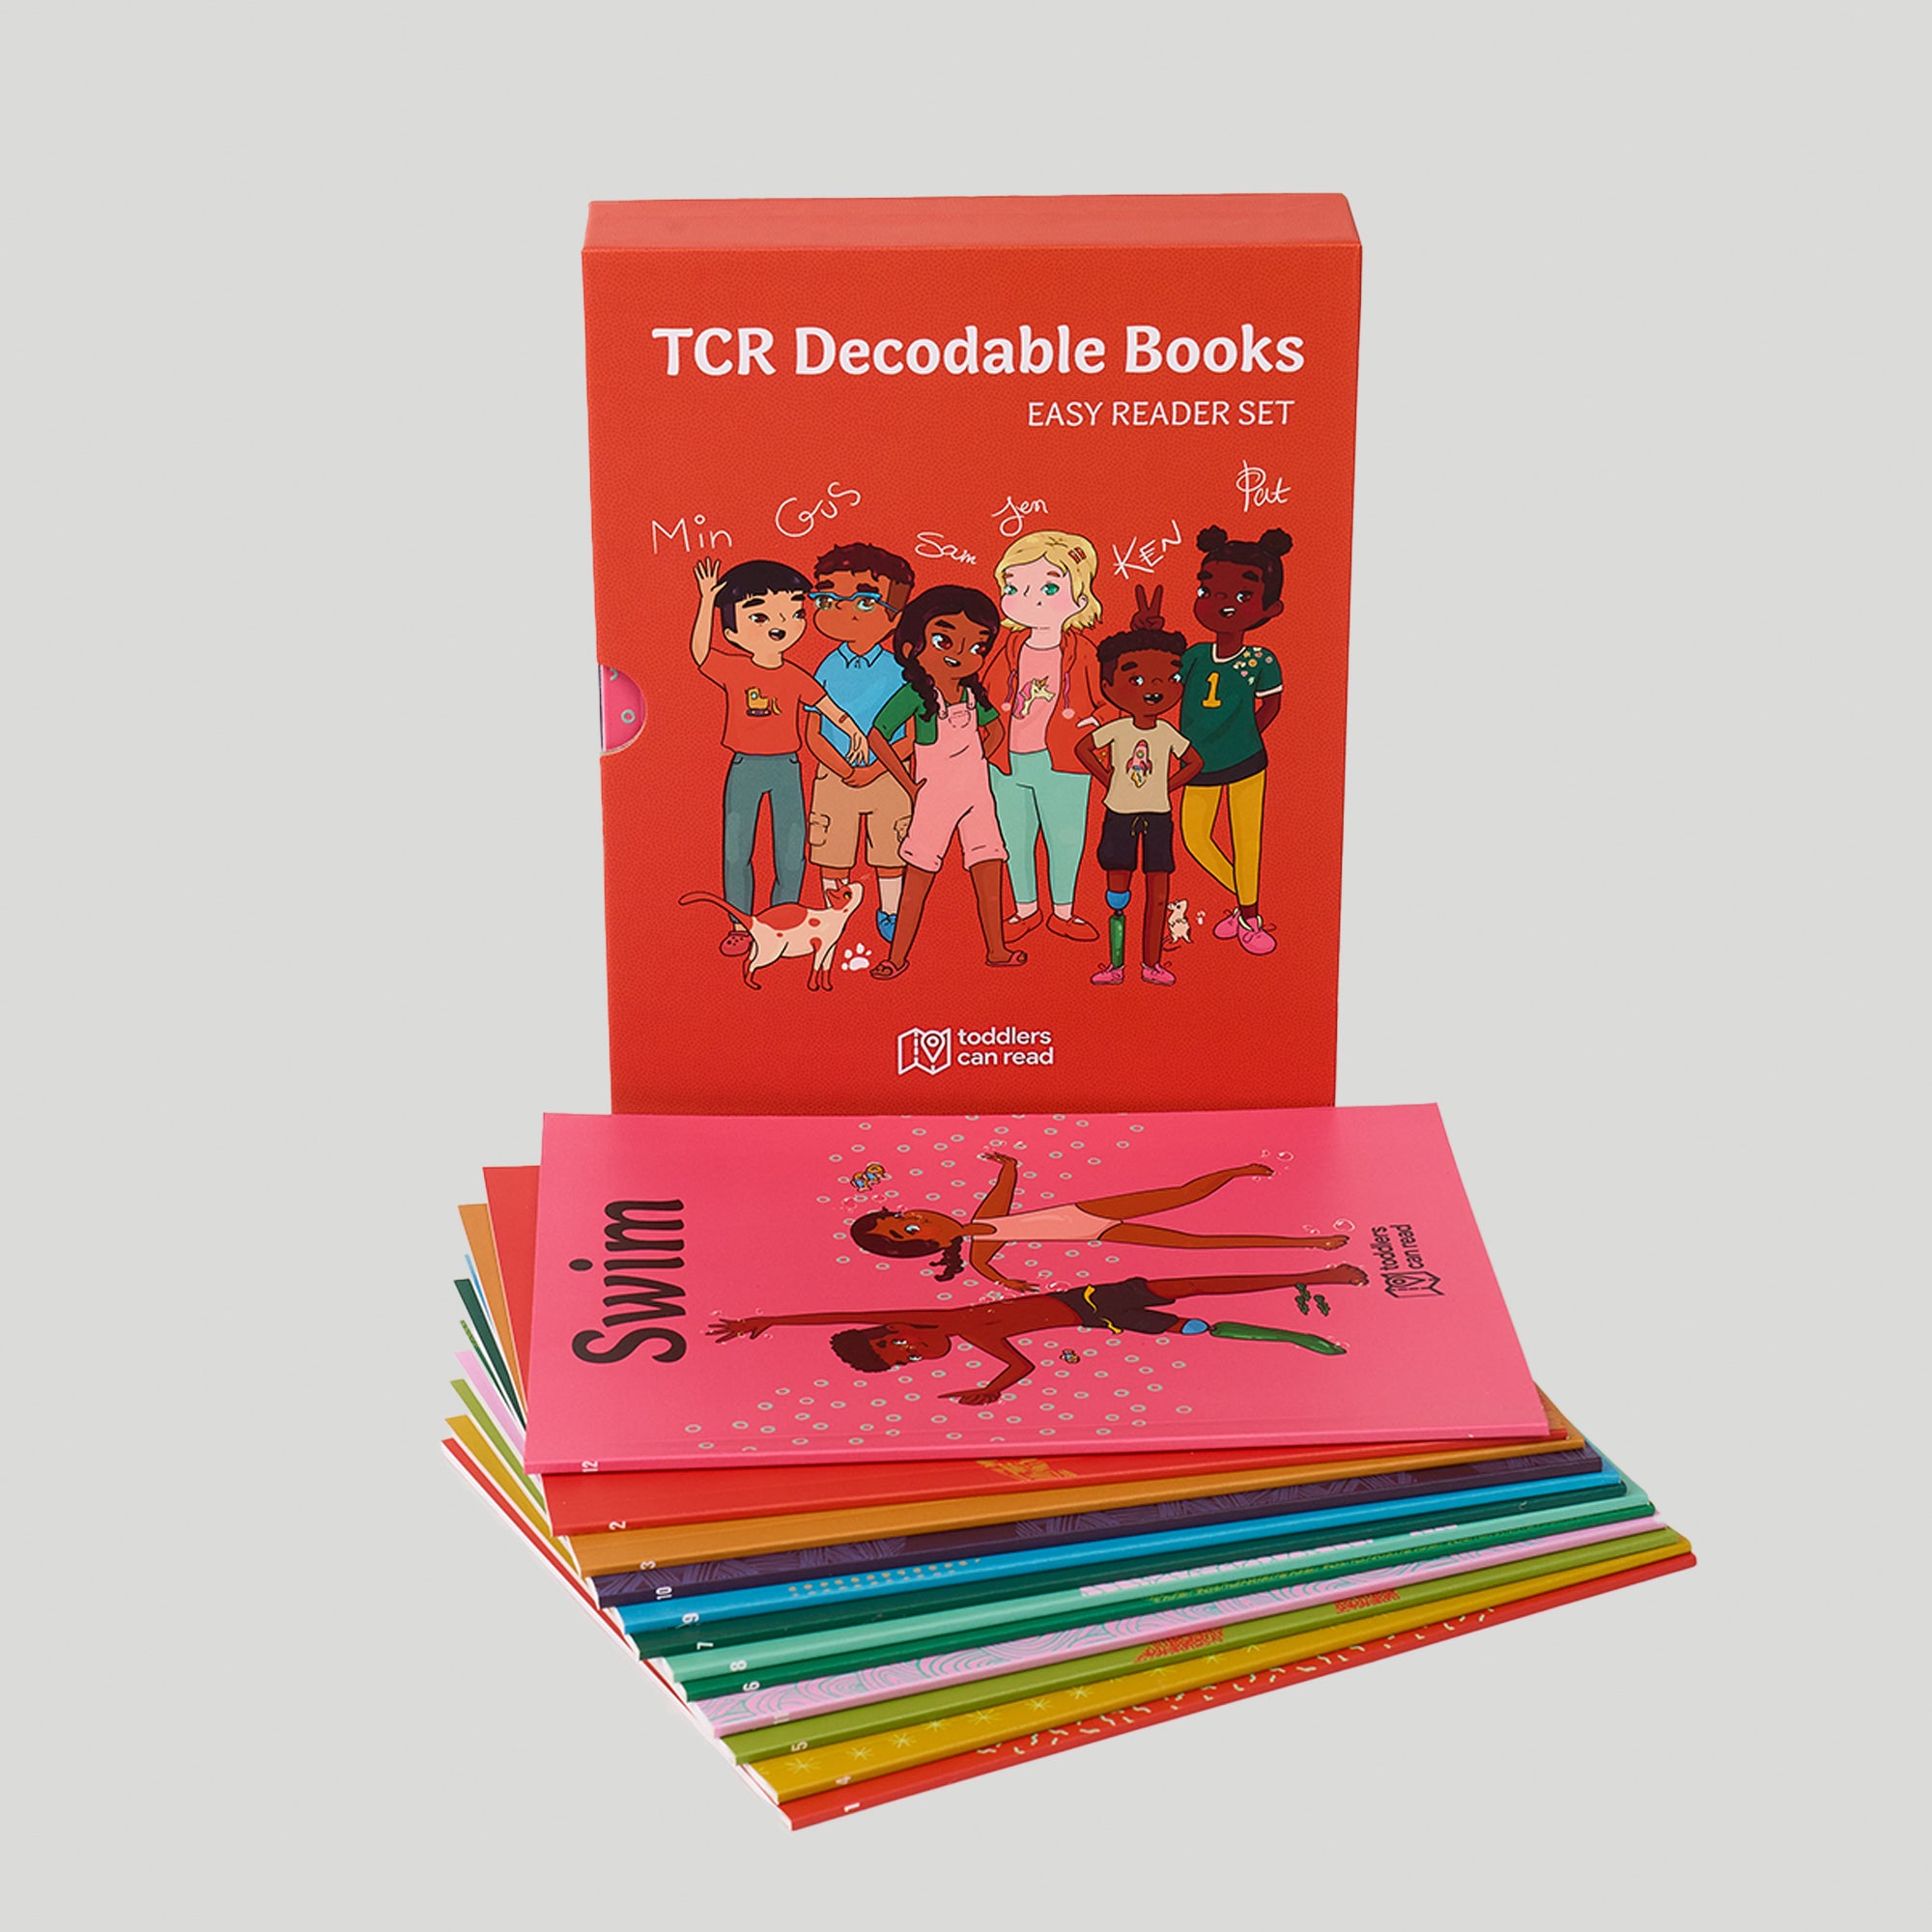 TCR Decodable Books